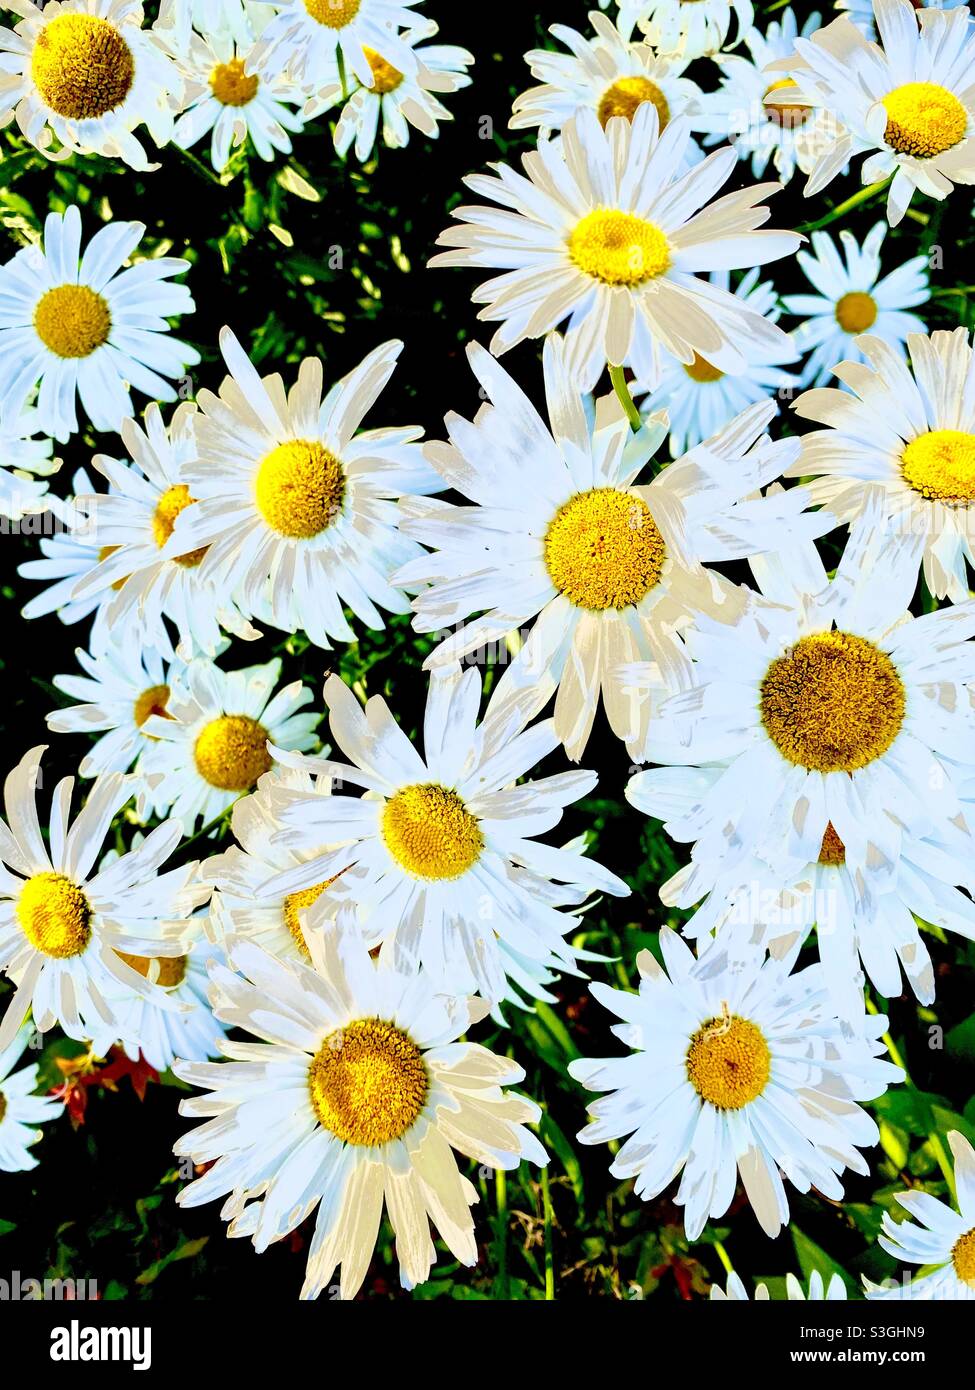 Field of daisies Stock Photo